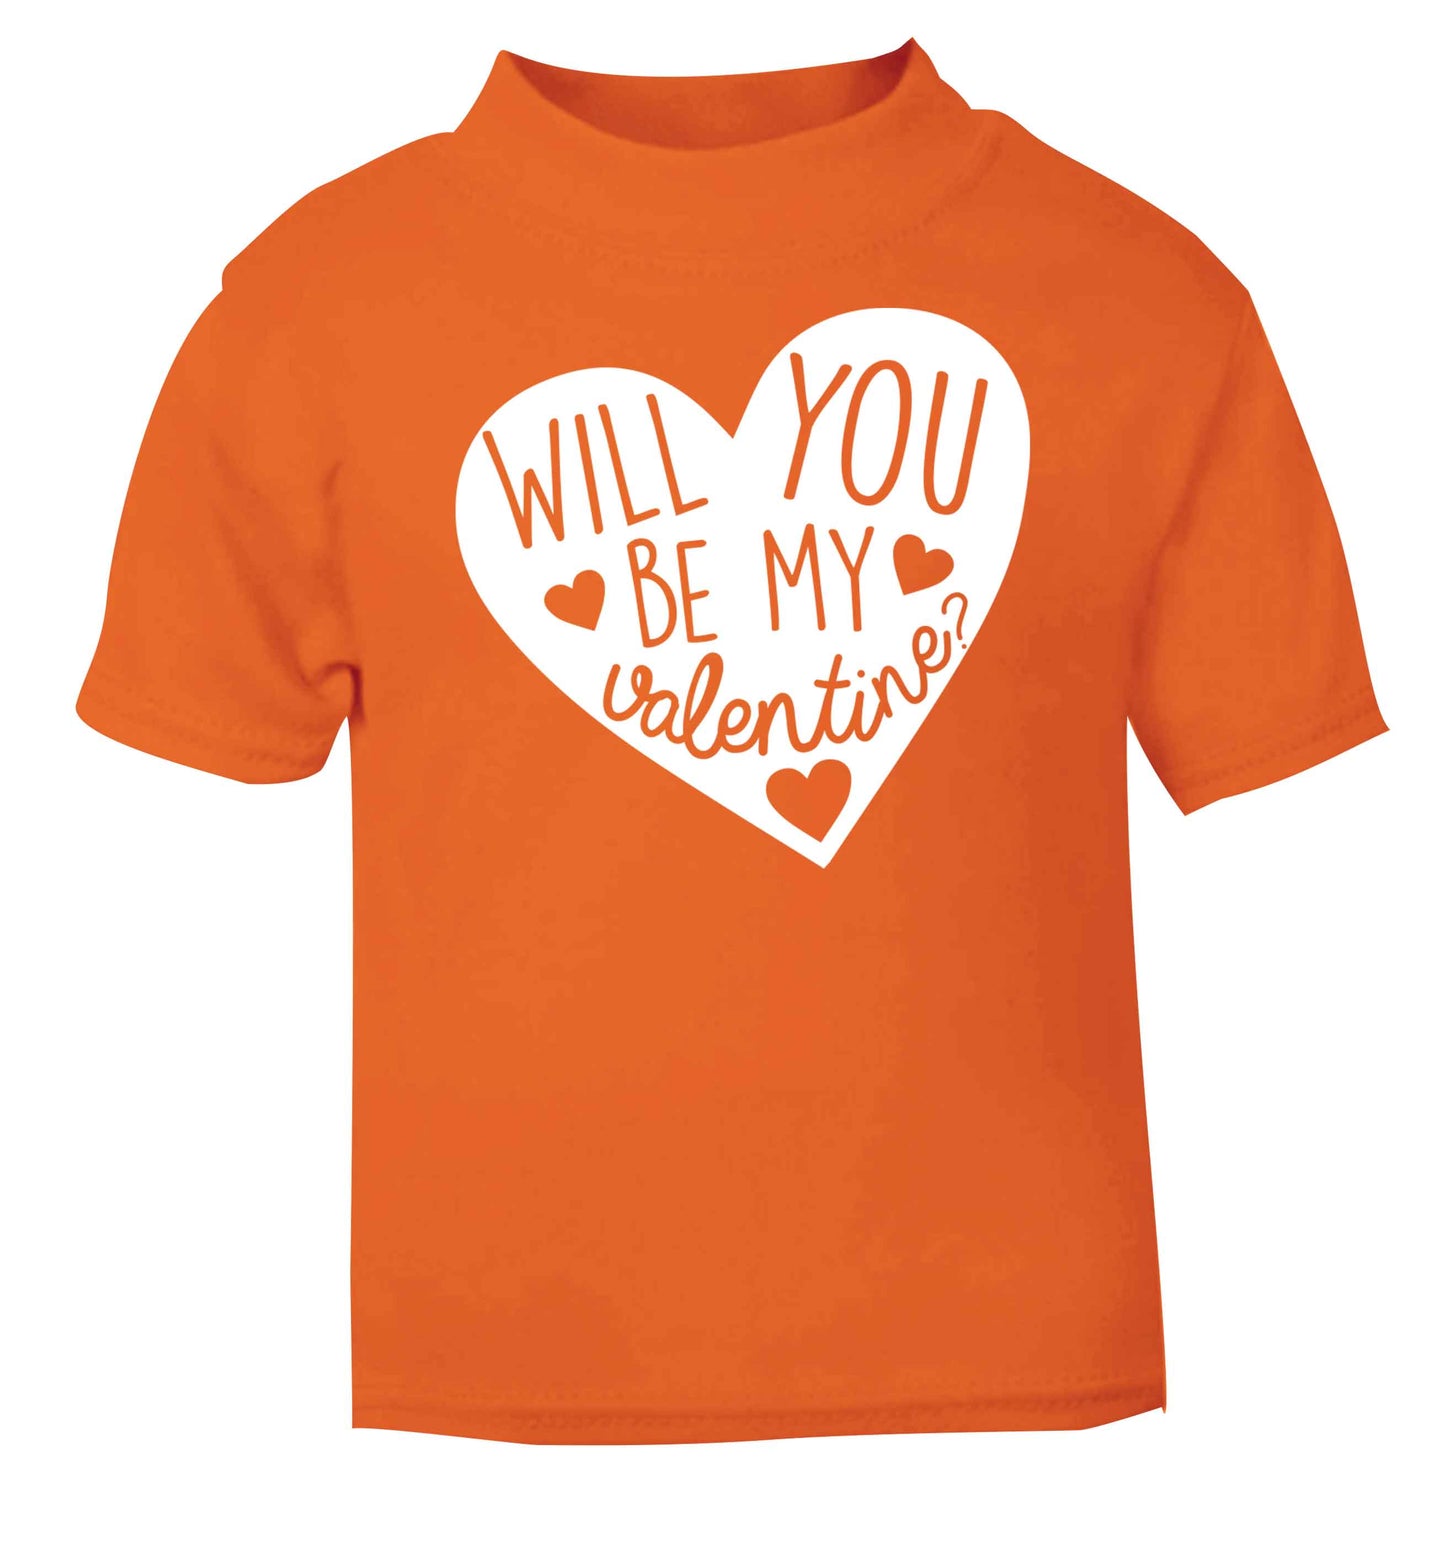 Will you be my valentine? orange baby toddler Tshirt 2 Years